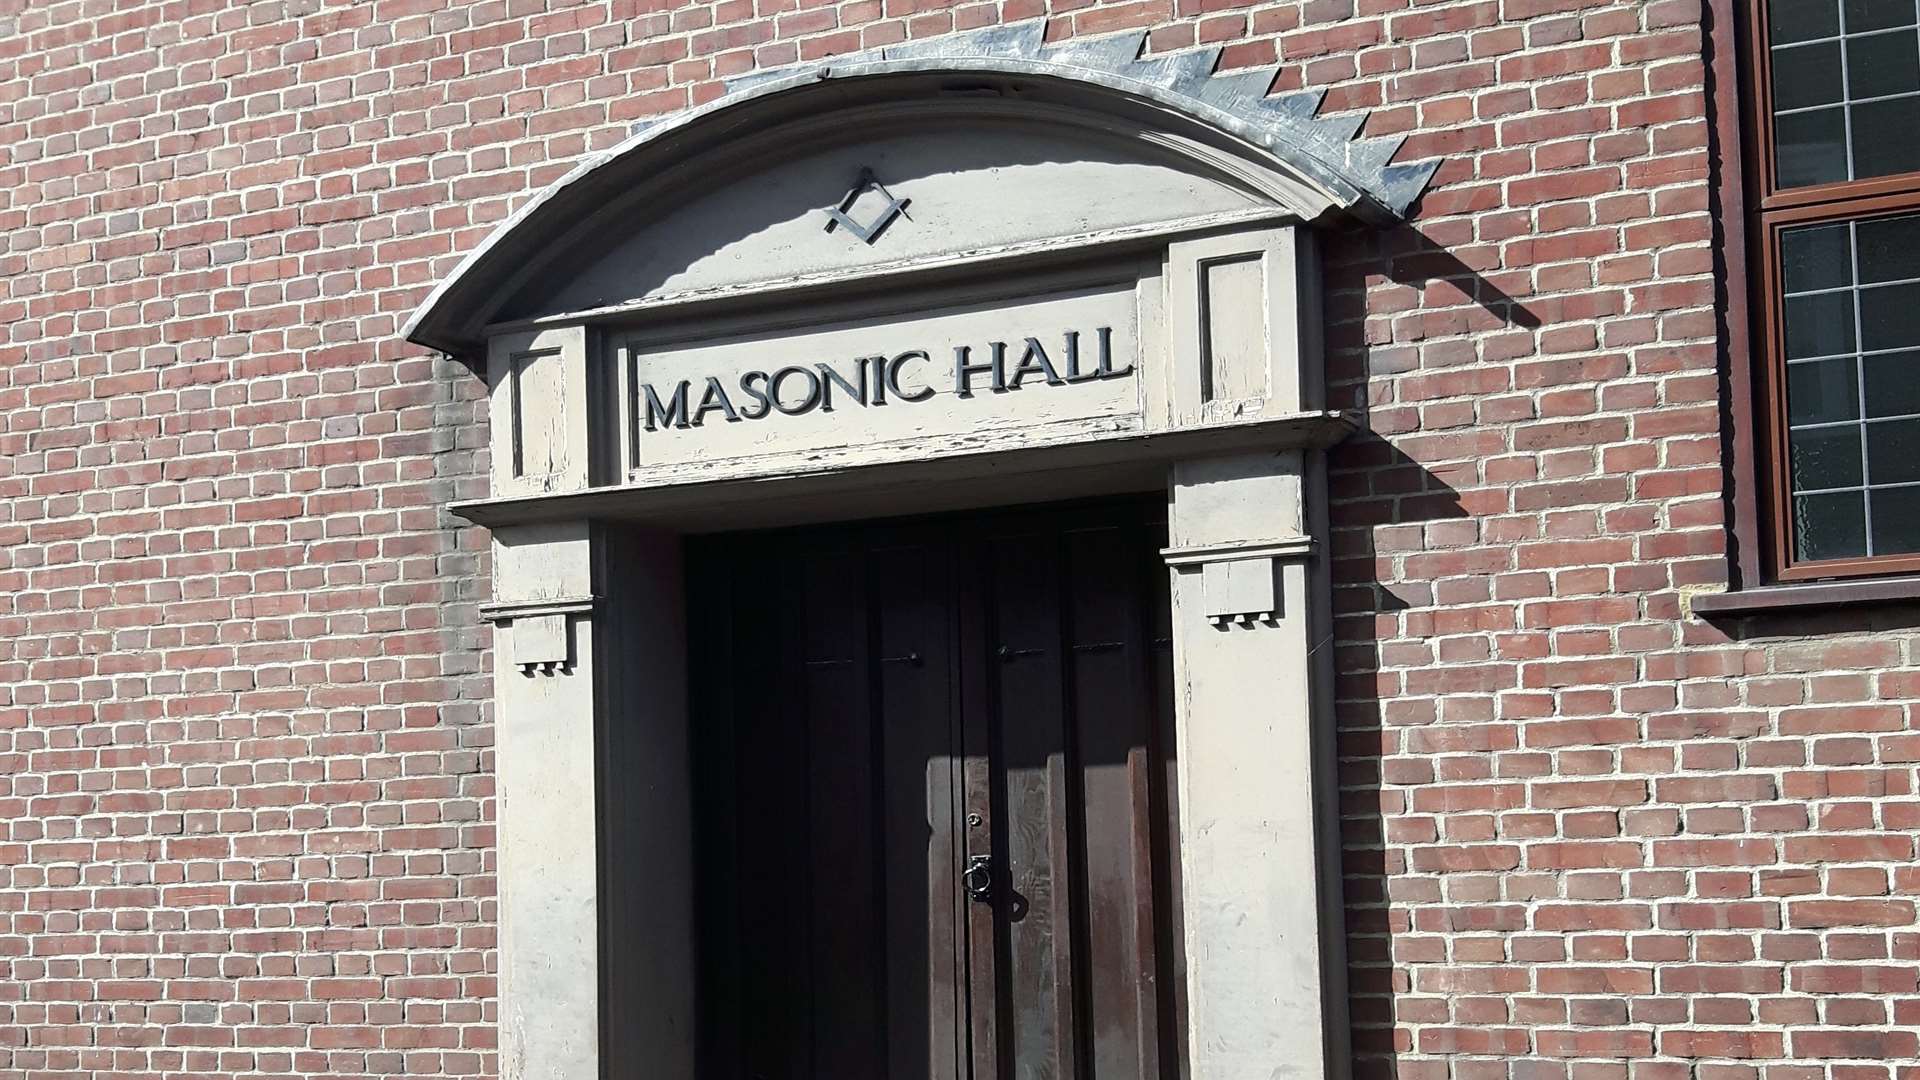 The Masonic Hall in Sandwich